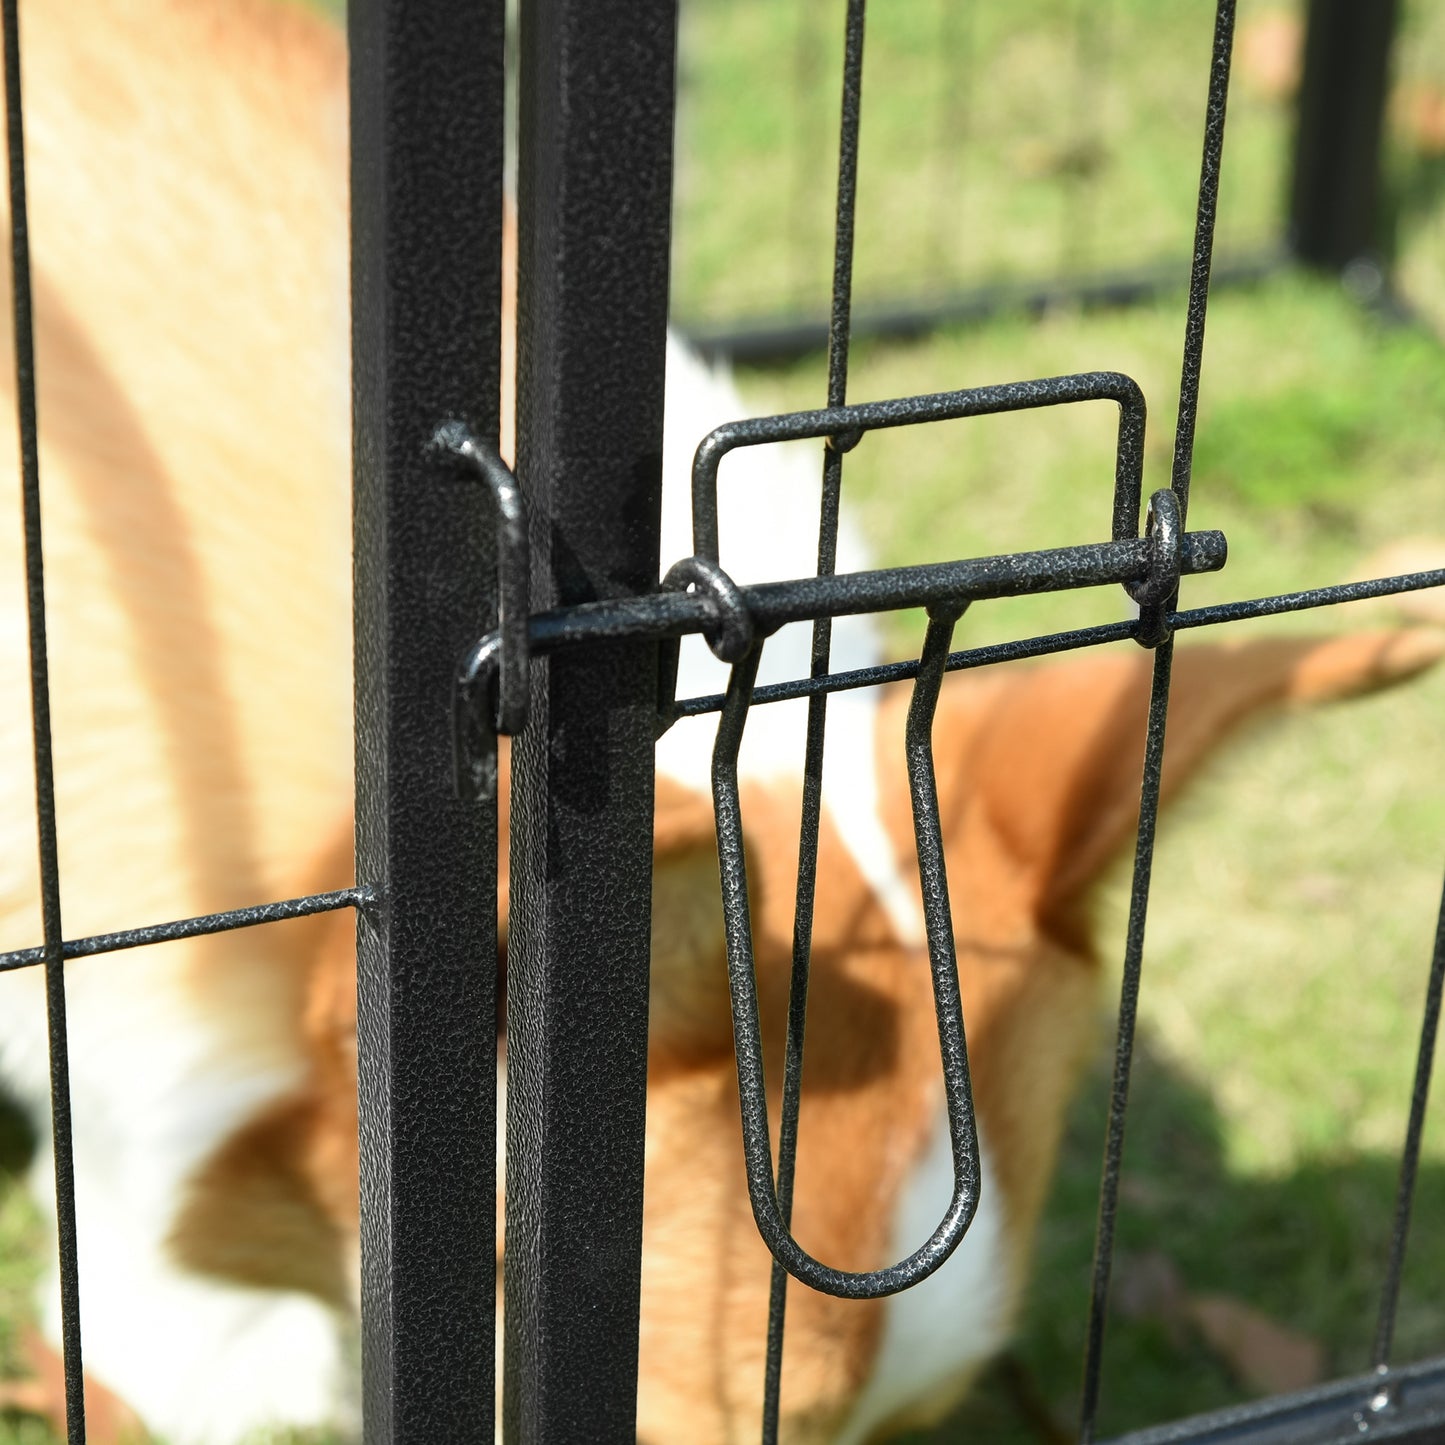 PawHut 4 Sizes Dog Pens Pet Puppy PlayPen Rabbit Puppy Cage Folding Run Fence Garden Metal Hutch